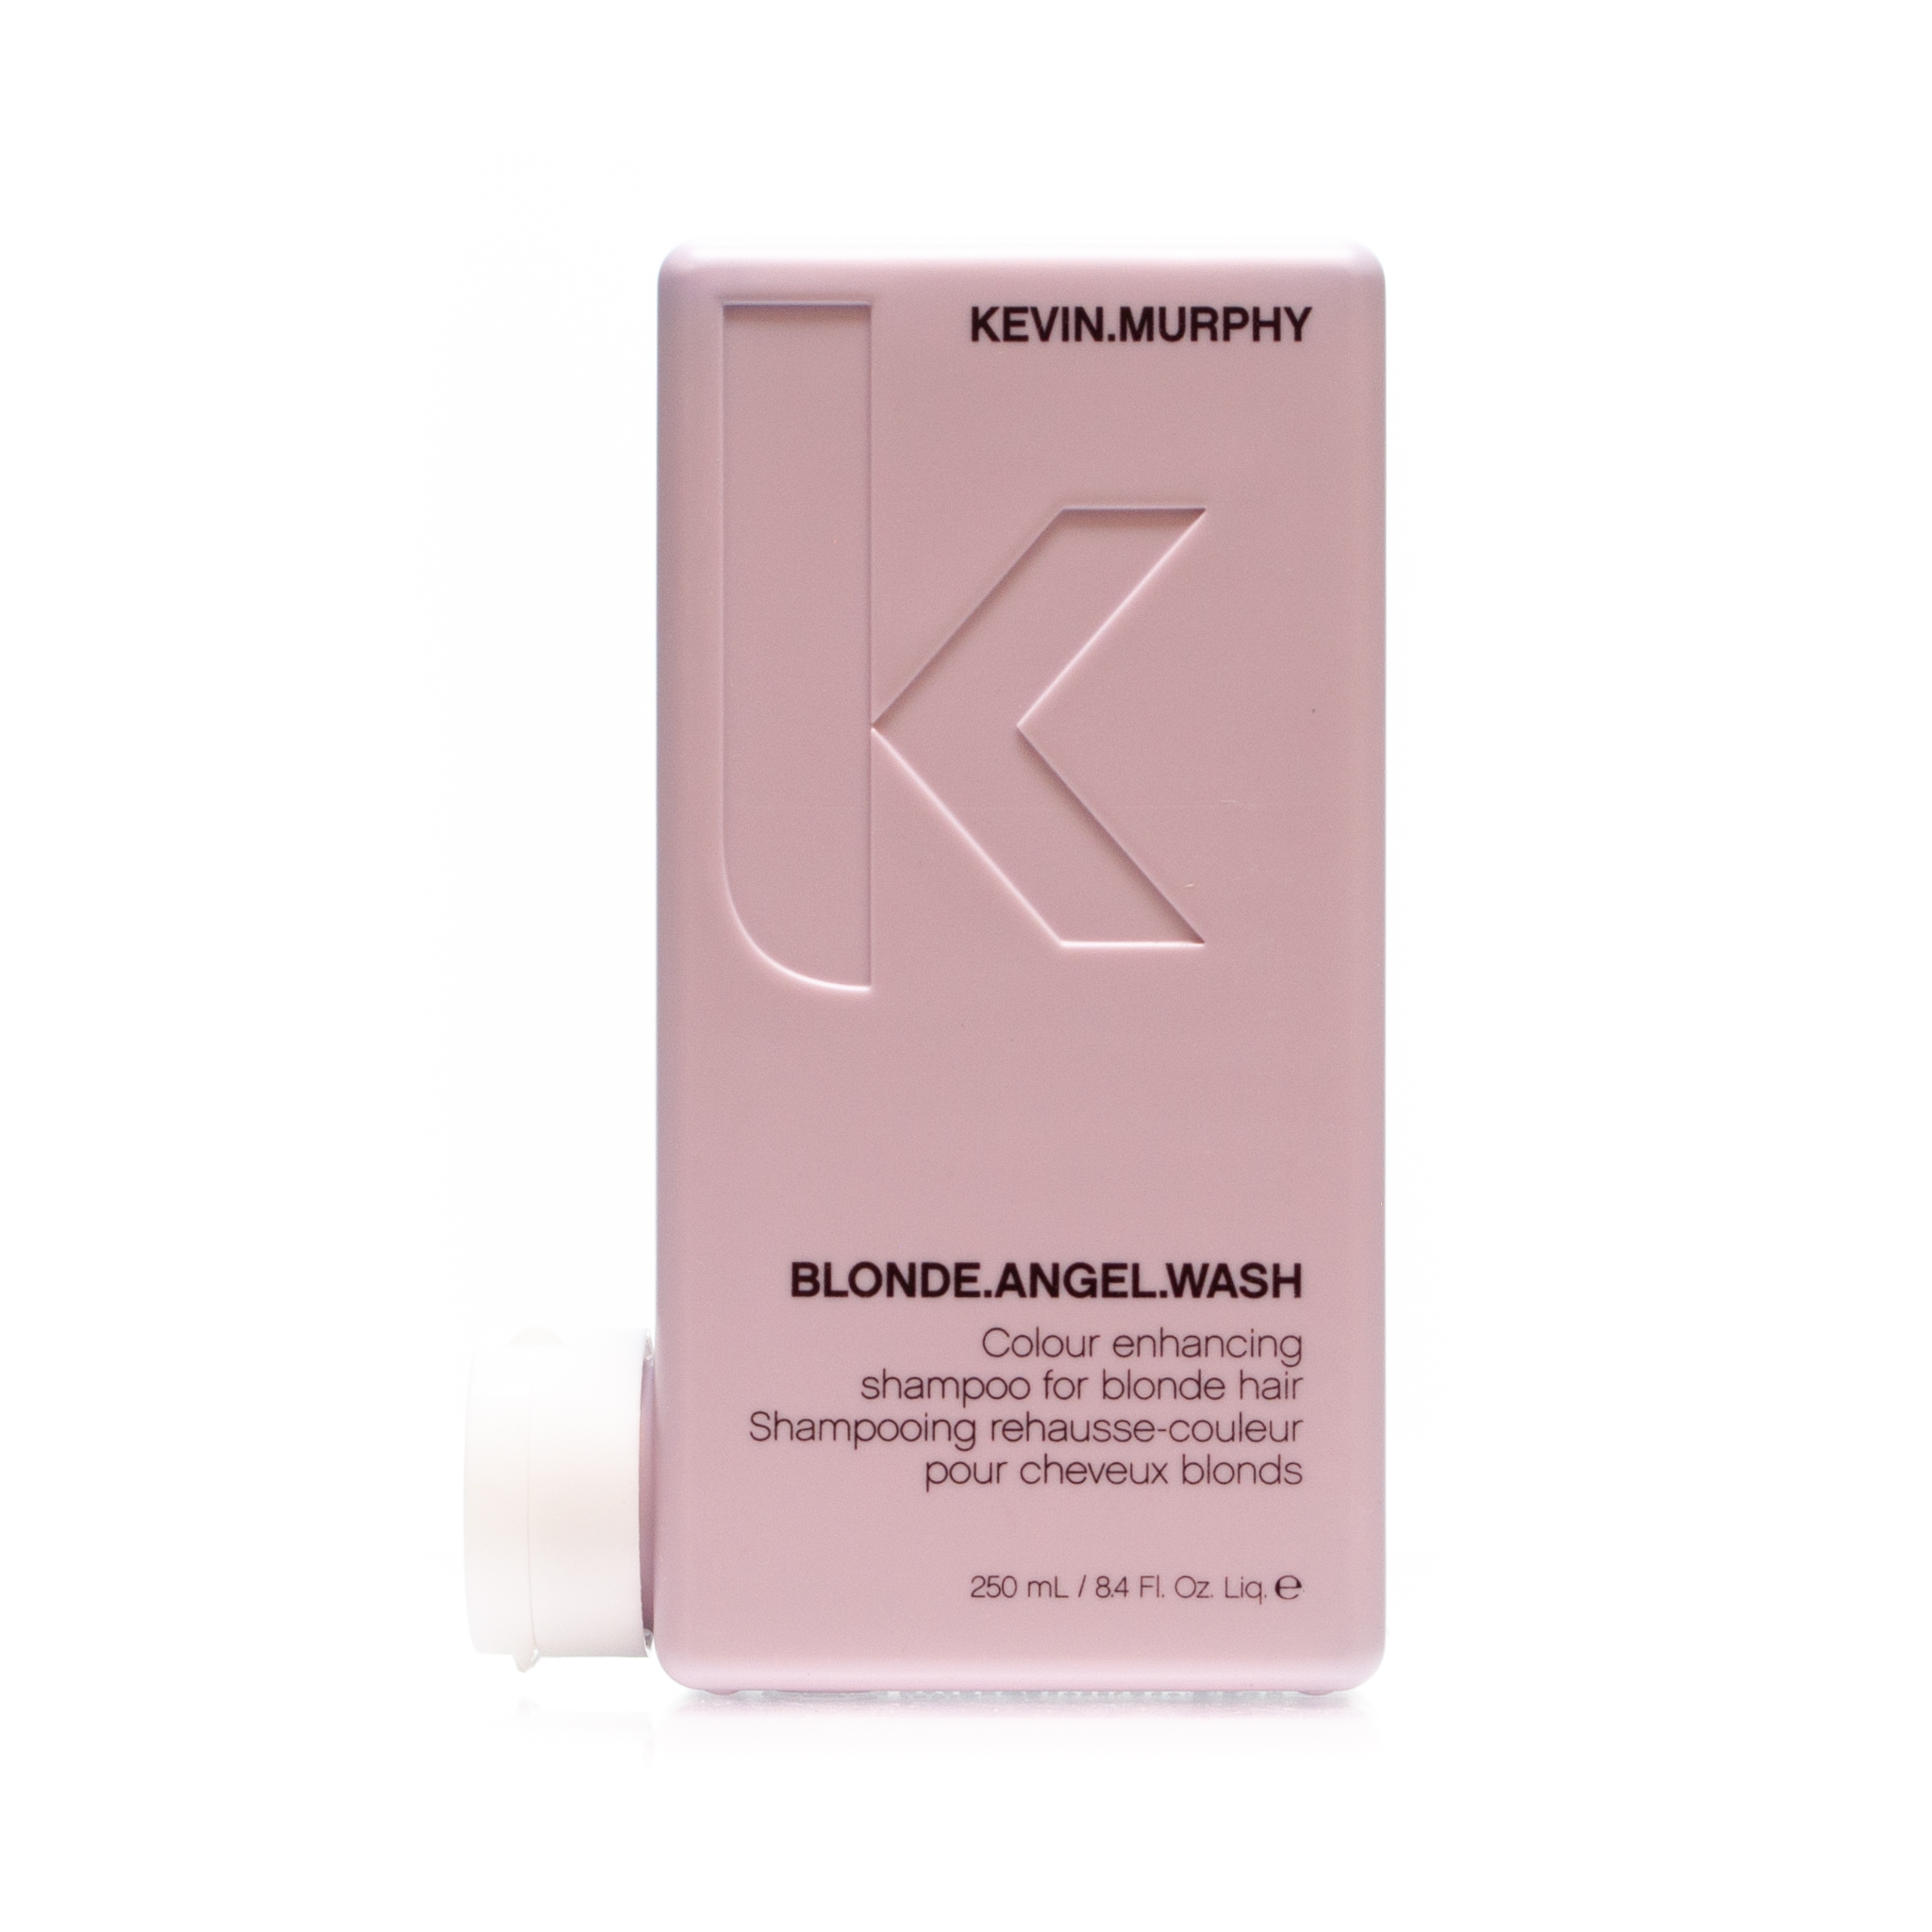 Kevin Murphy Blonde Angel Wash Colour Enhancing Shampoo 84oz250ml